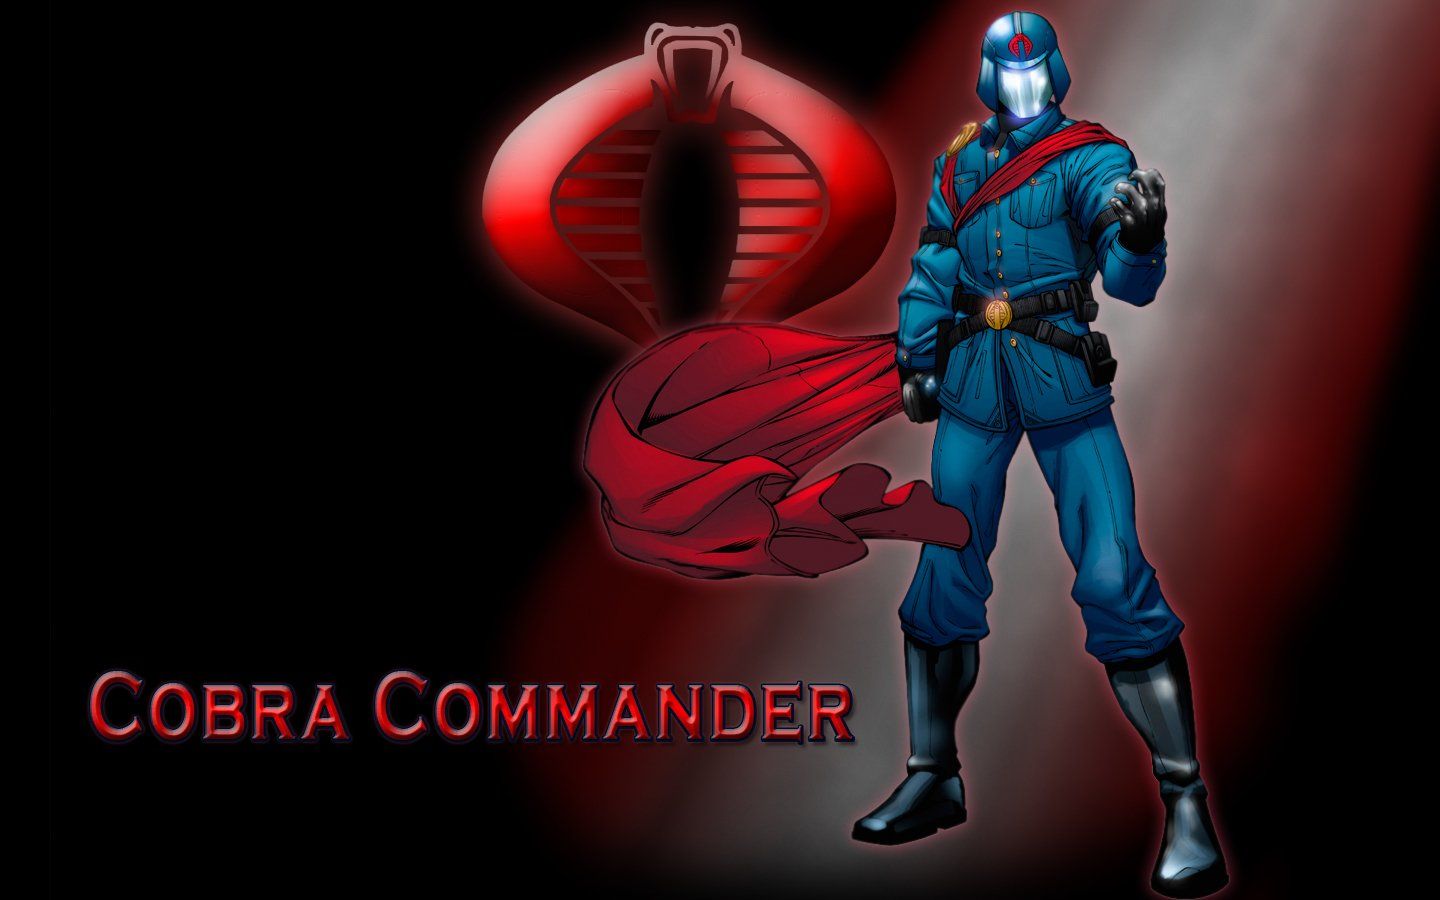 Cobra Commander Wallpaper. Commander Shepard Wallpaper, Clone Commander Wallpaper and Commander Wolffe Wallpaper